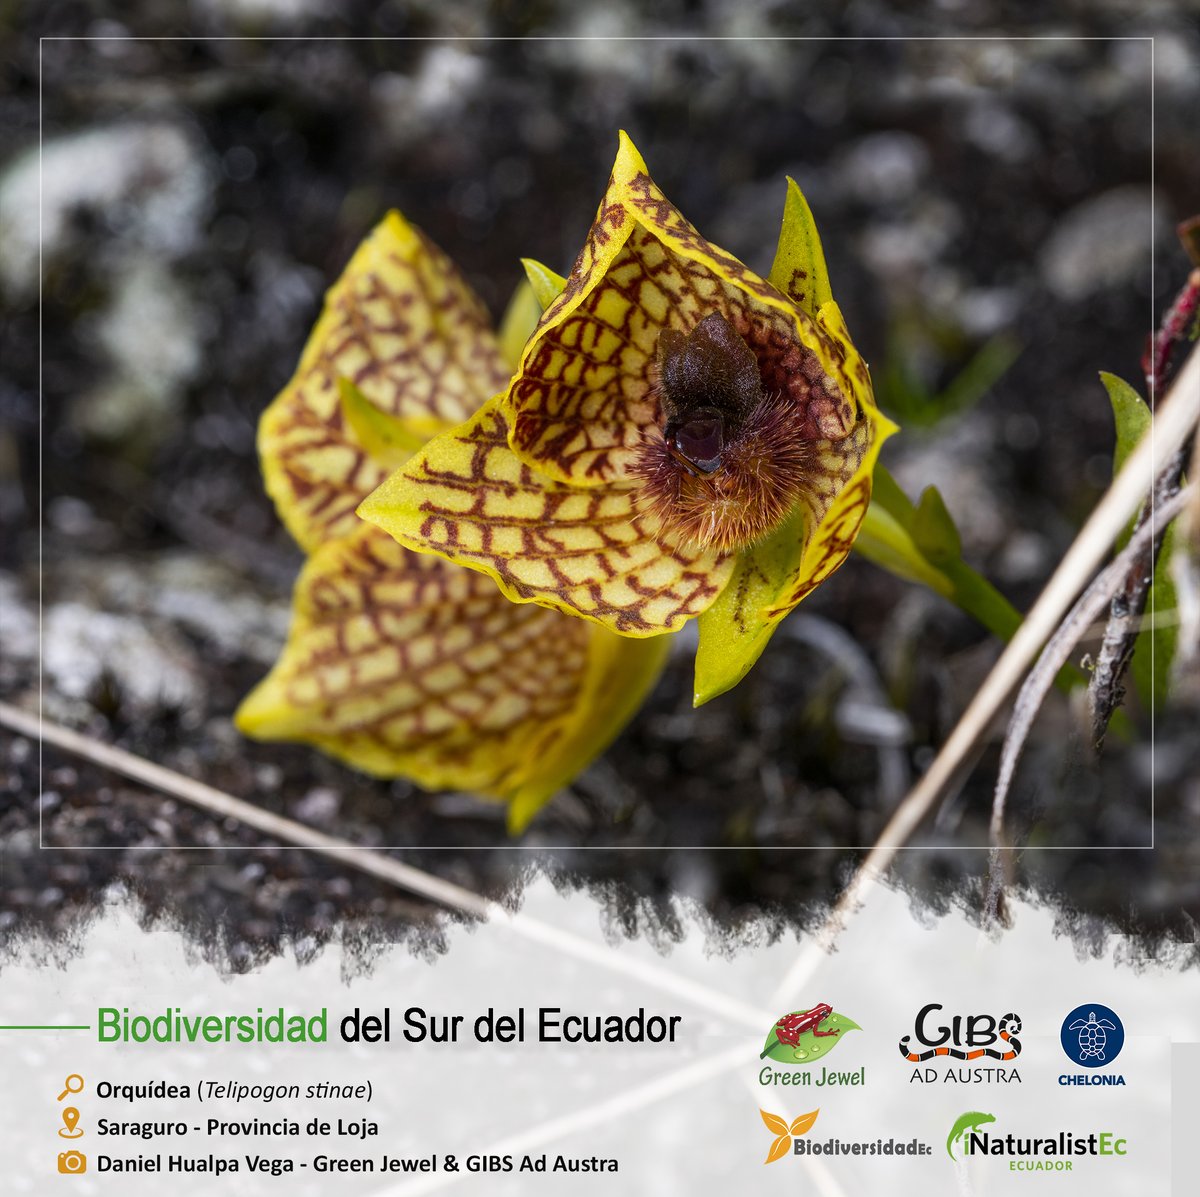 BIODIVERSIDAD DEL SUR DEL ECUADOR

🔎: Orquídea / Telipogon stinae
🏞️: Saraguro - Provincia de Loja
📷: Daniel Hualpa Vega - Green Jewel & GIBS Ad Austra

#BiodiversidadDelSurDelEcuador #GreenJewel #Chelonia #BiodiversidadEc #iNaturalistEc #CienciaCiudadana #SomosInaturalistEc